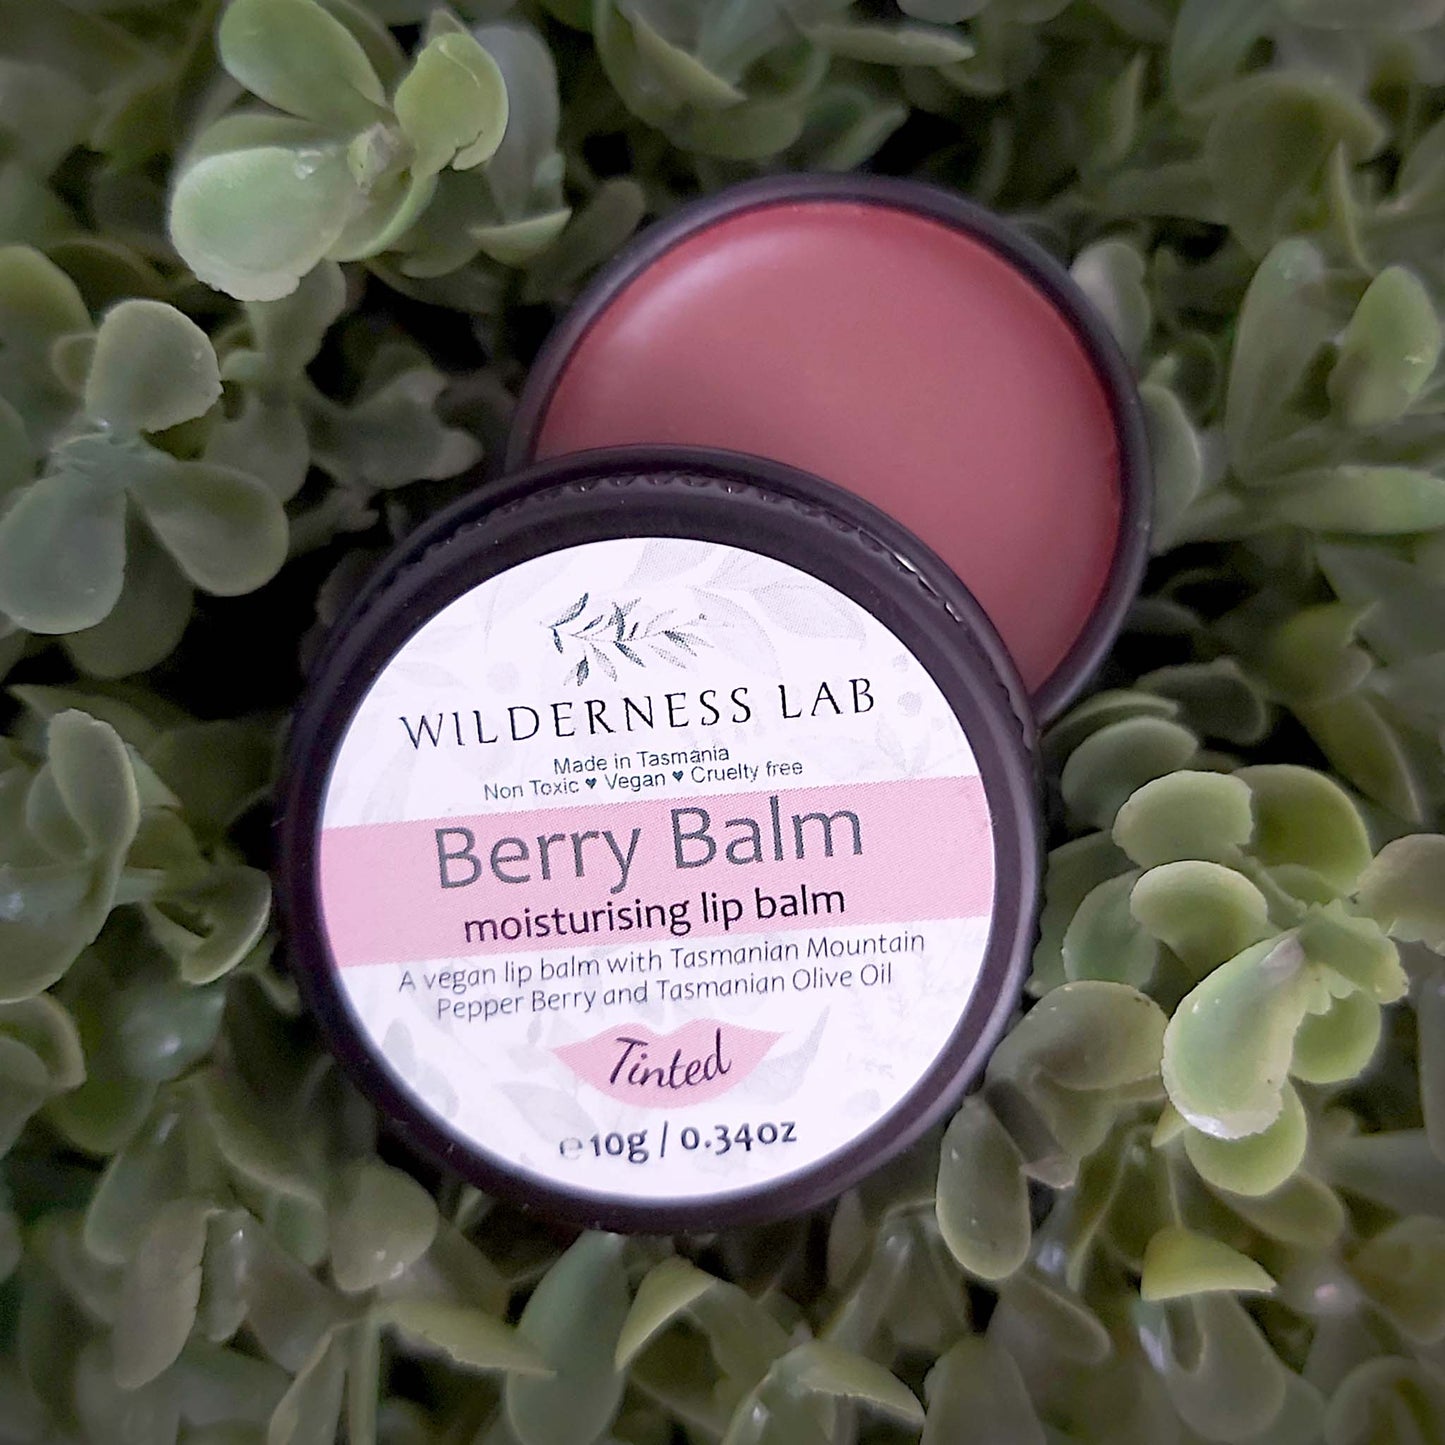 Berry Balm - Tinted. Vegan lip balm with Tasmanian Mountain Pepper Berry